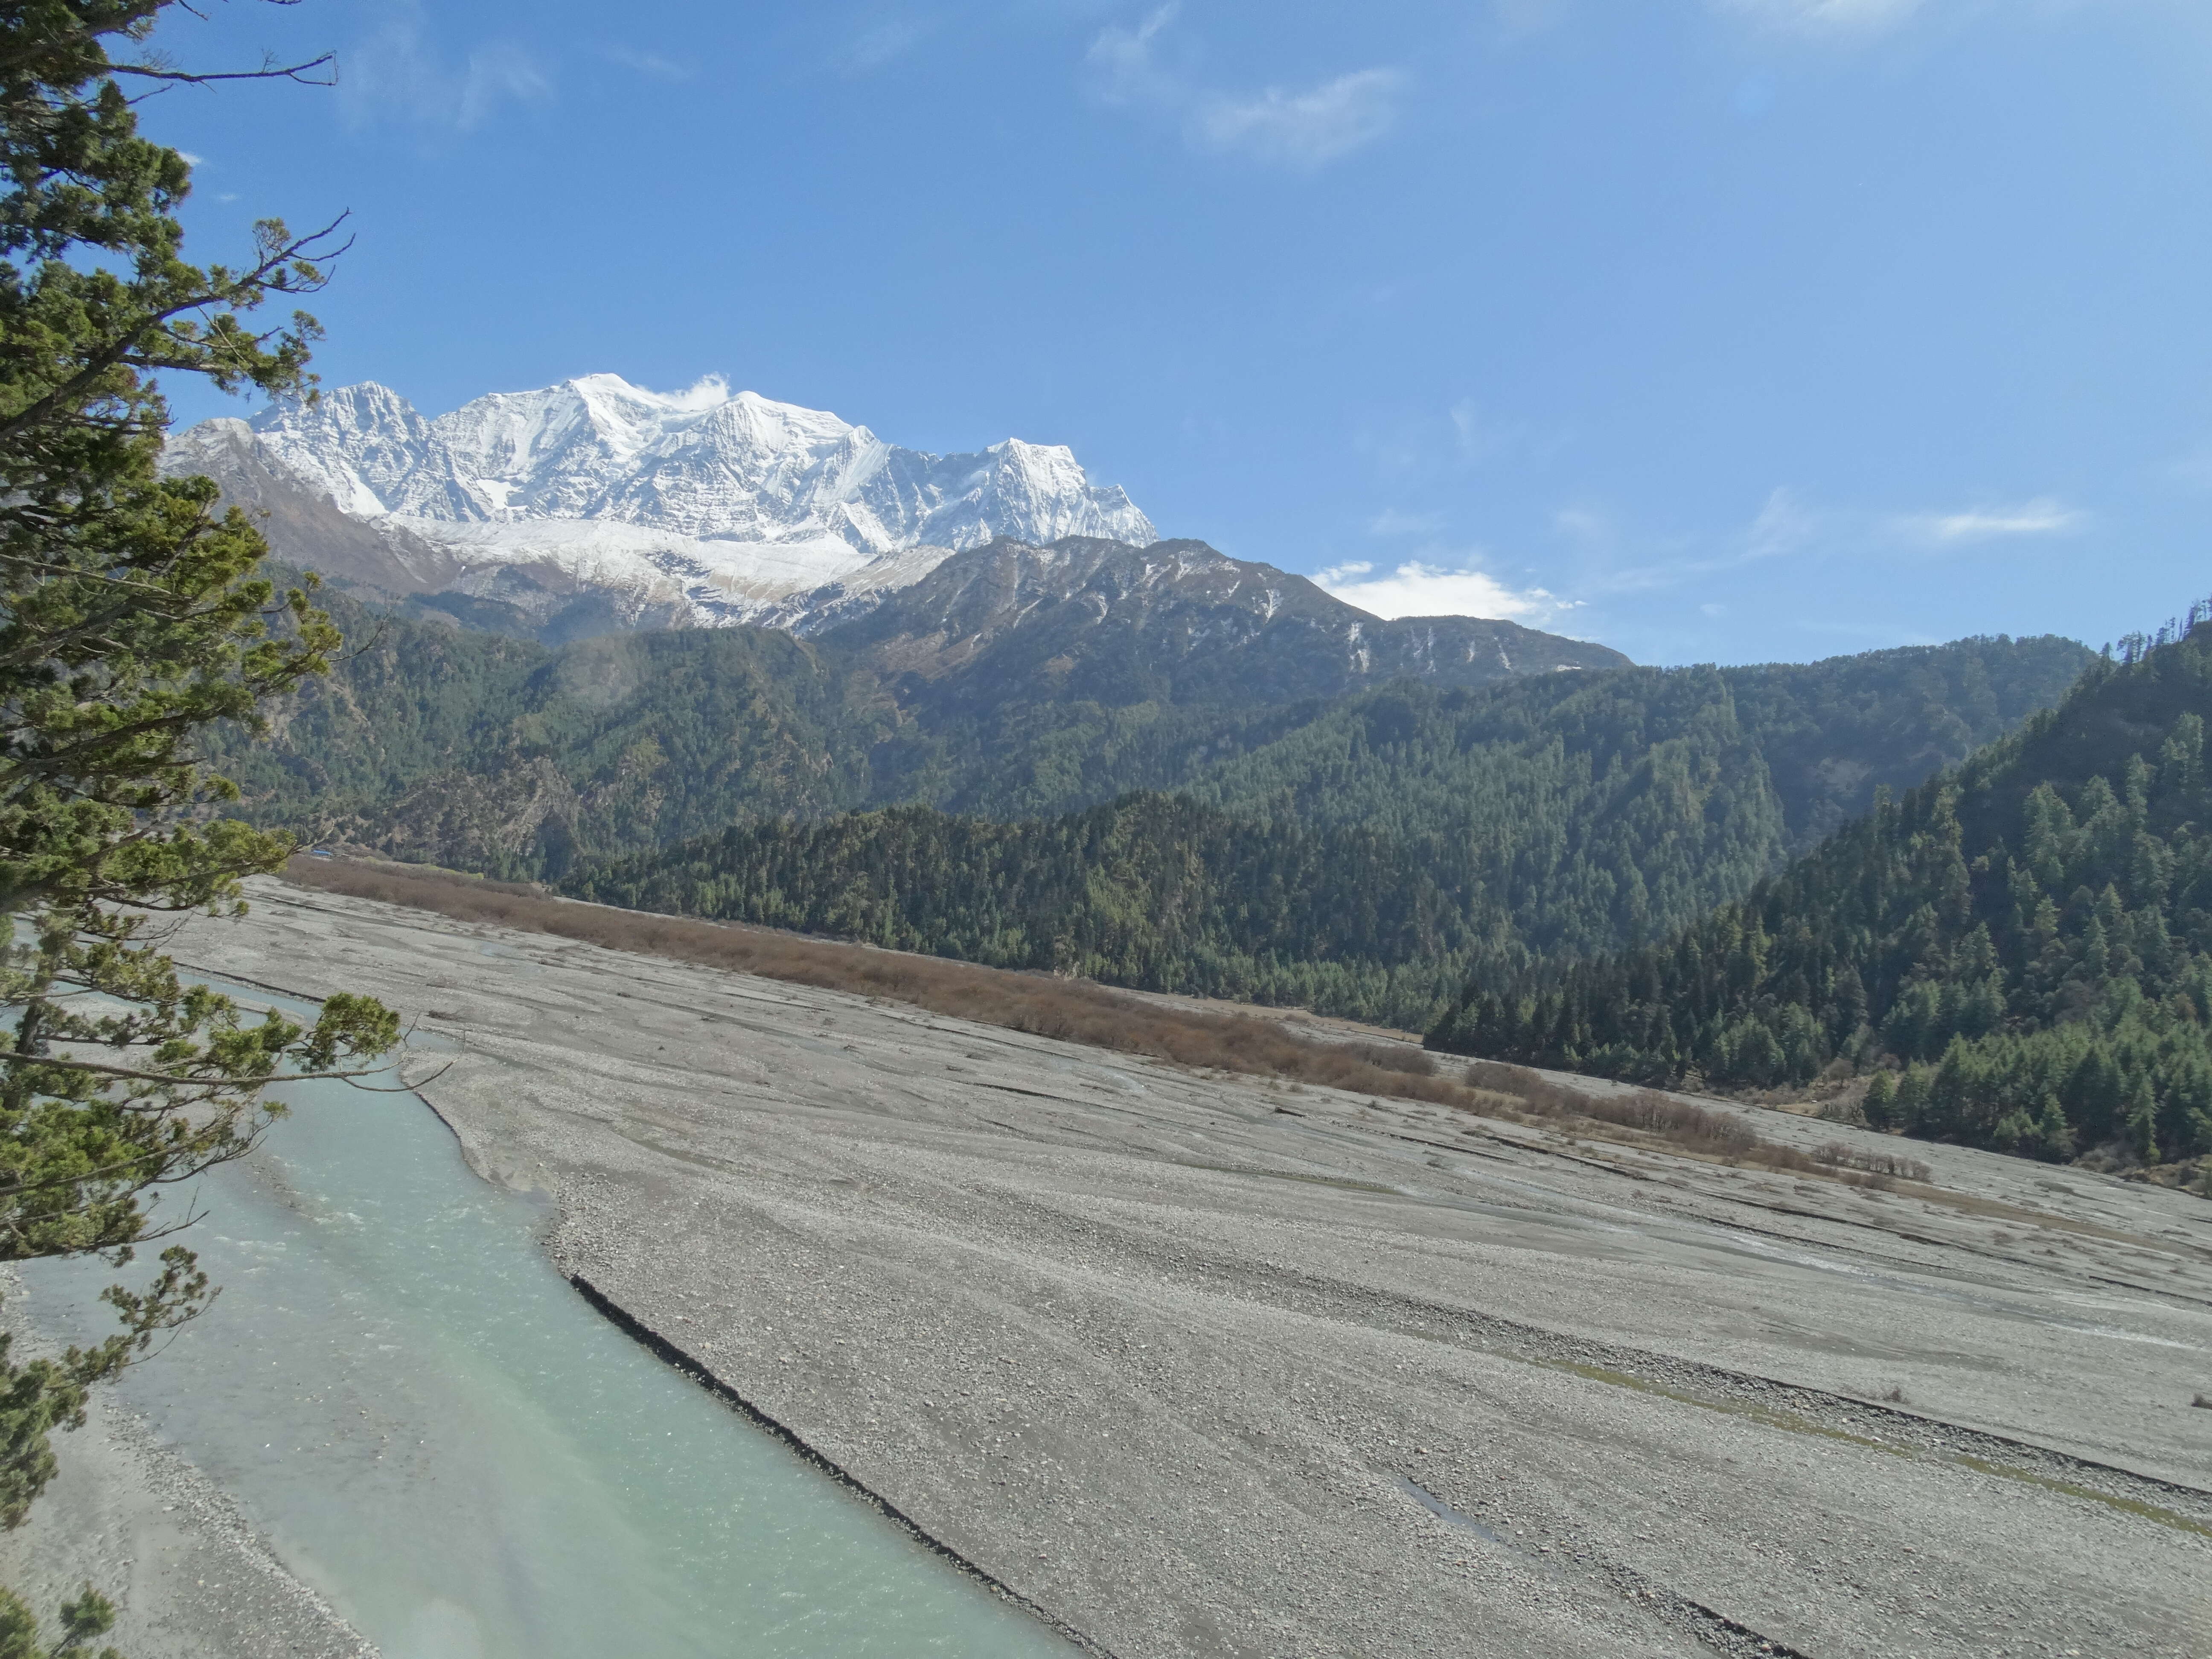 Sivun Himalajansypressi kuva